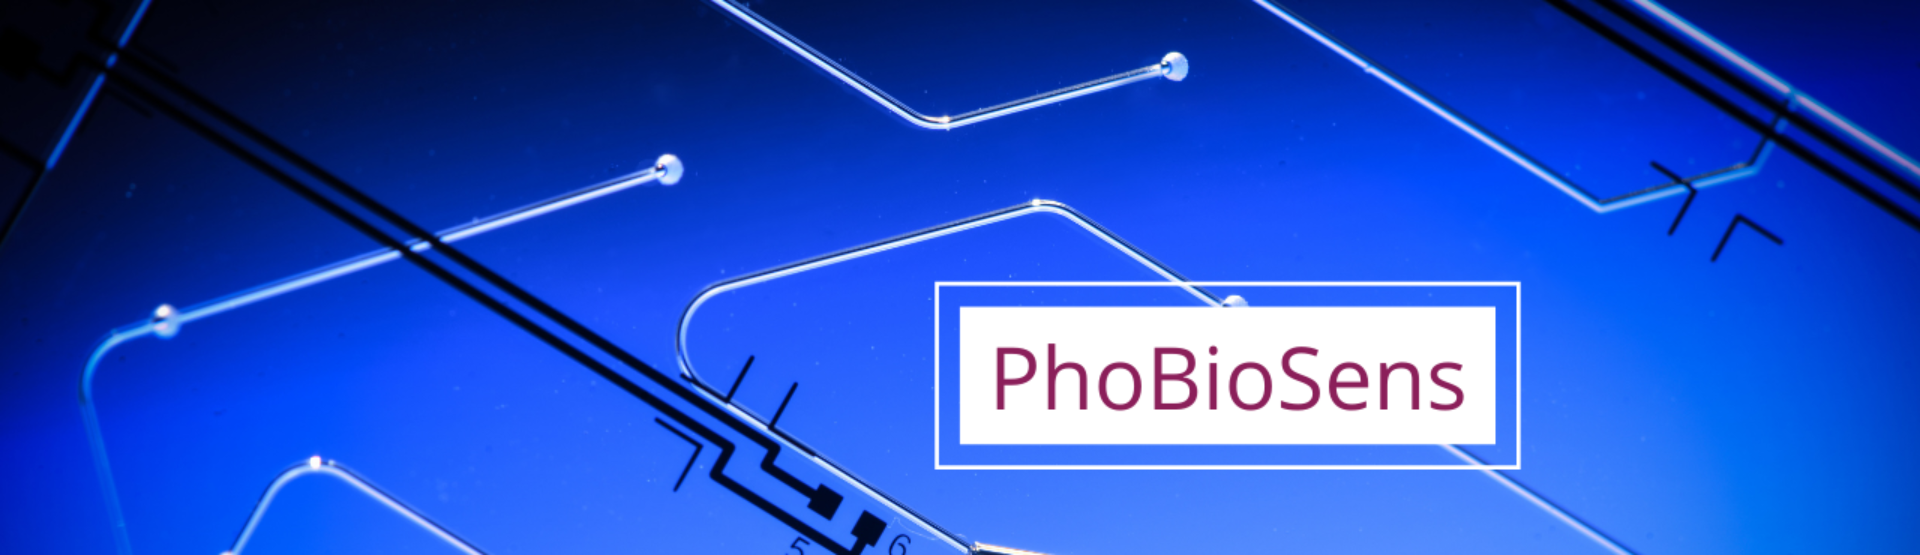 phobiosens research project